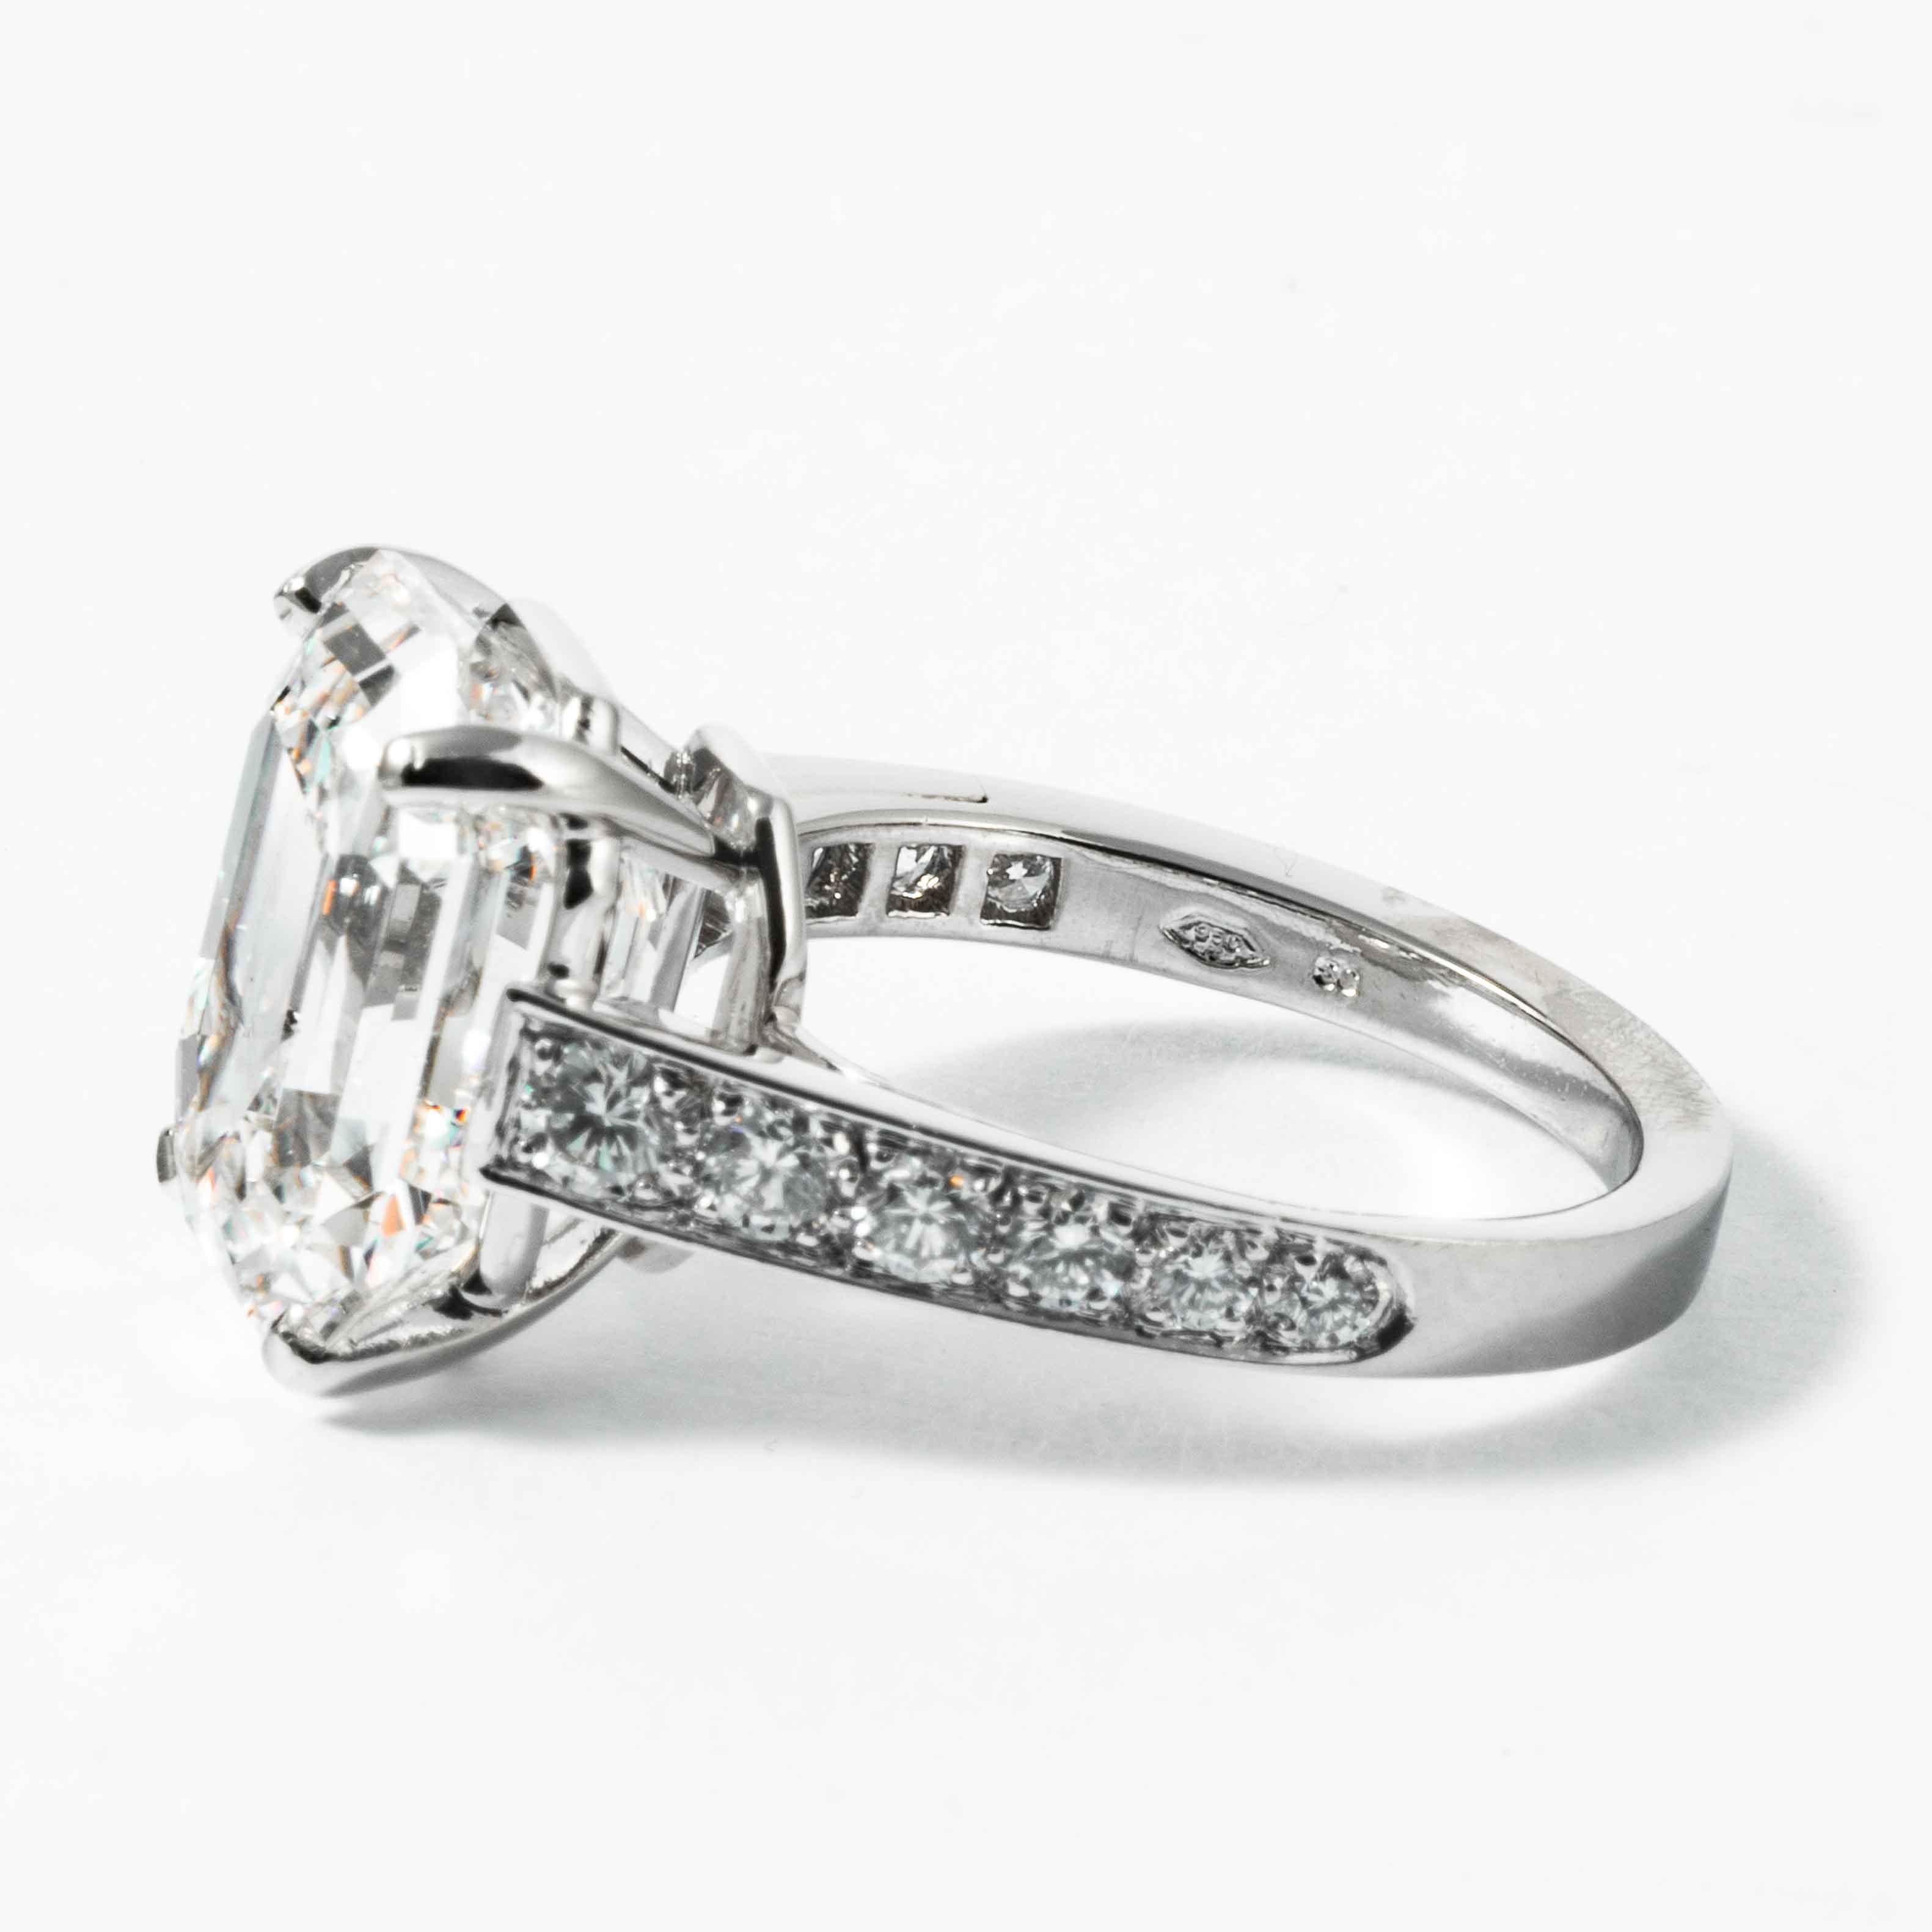 Women's Shreve, Crump & Low GIA Certified 10.19 Carat H VS1 Emerald Cut Diamond Ring